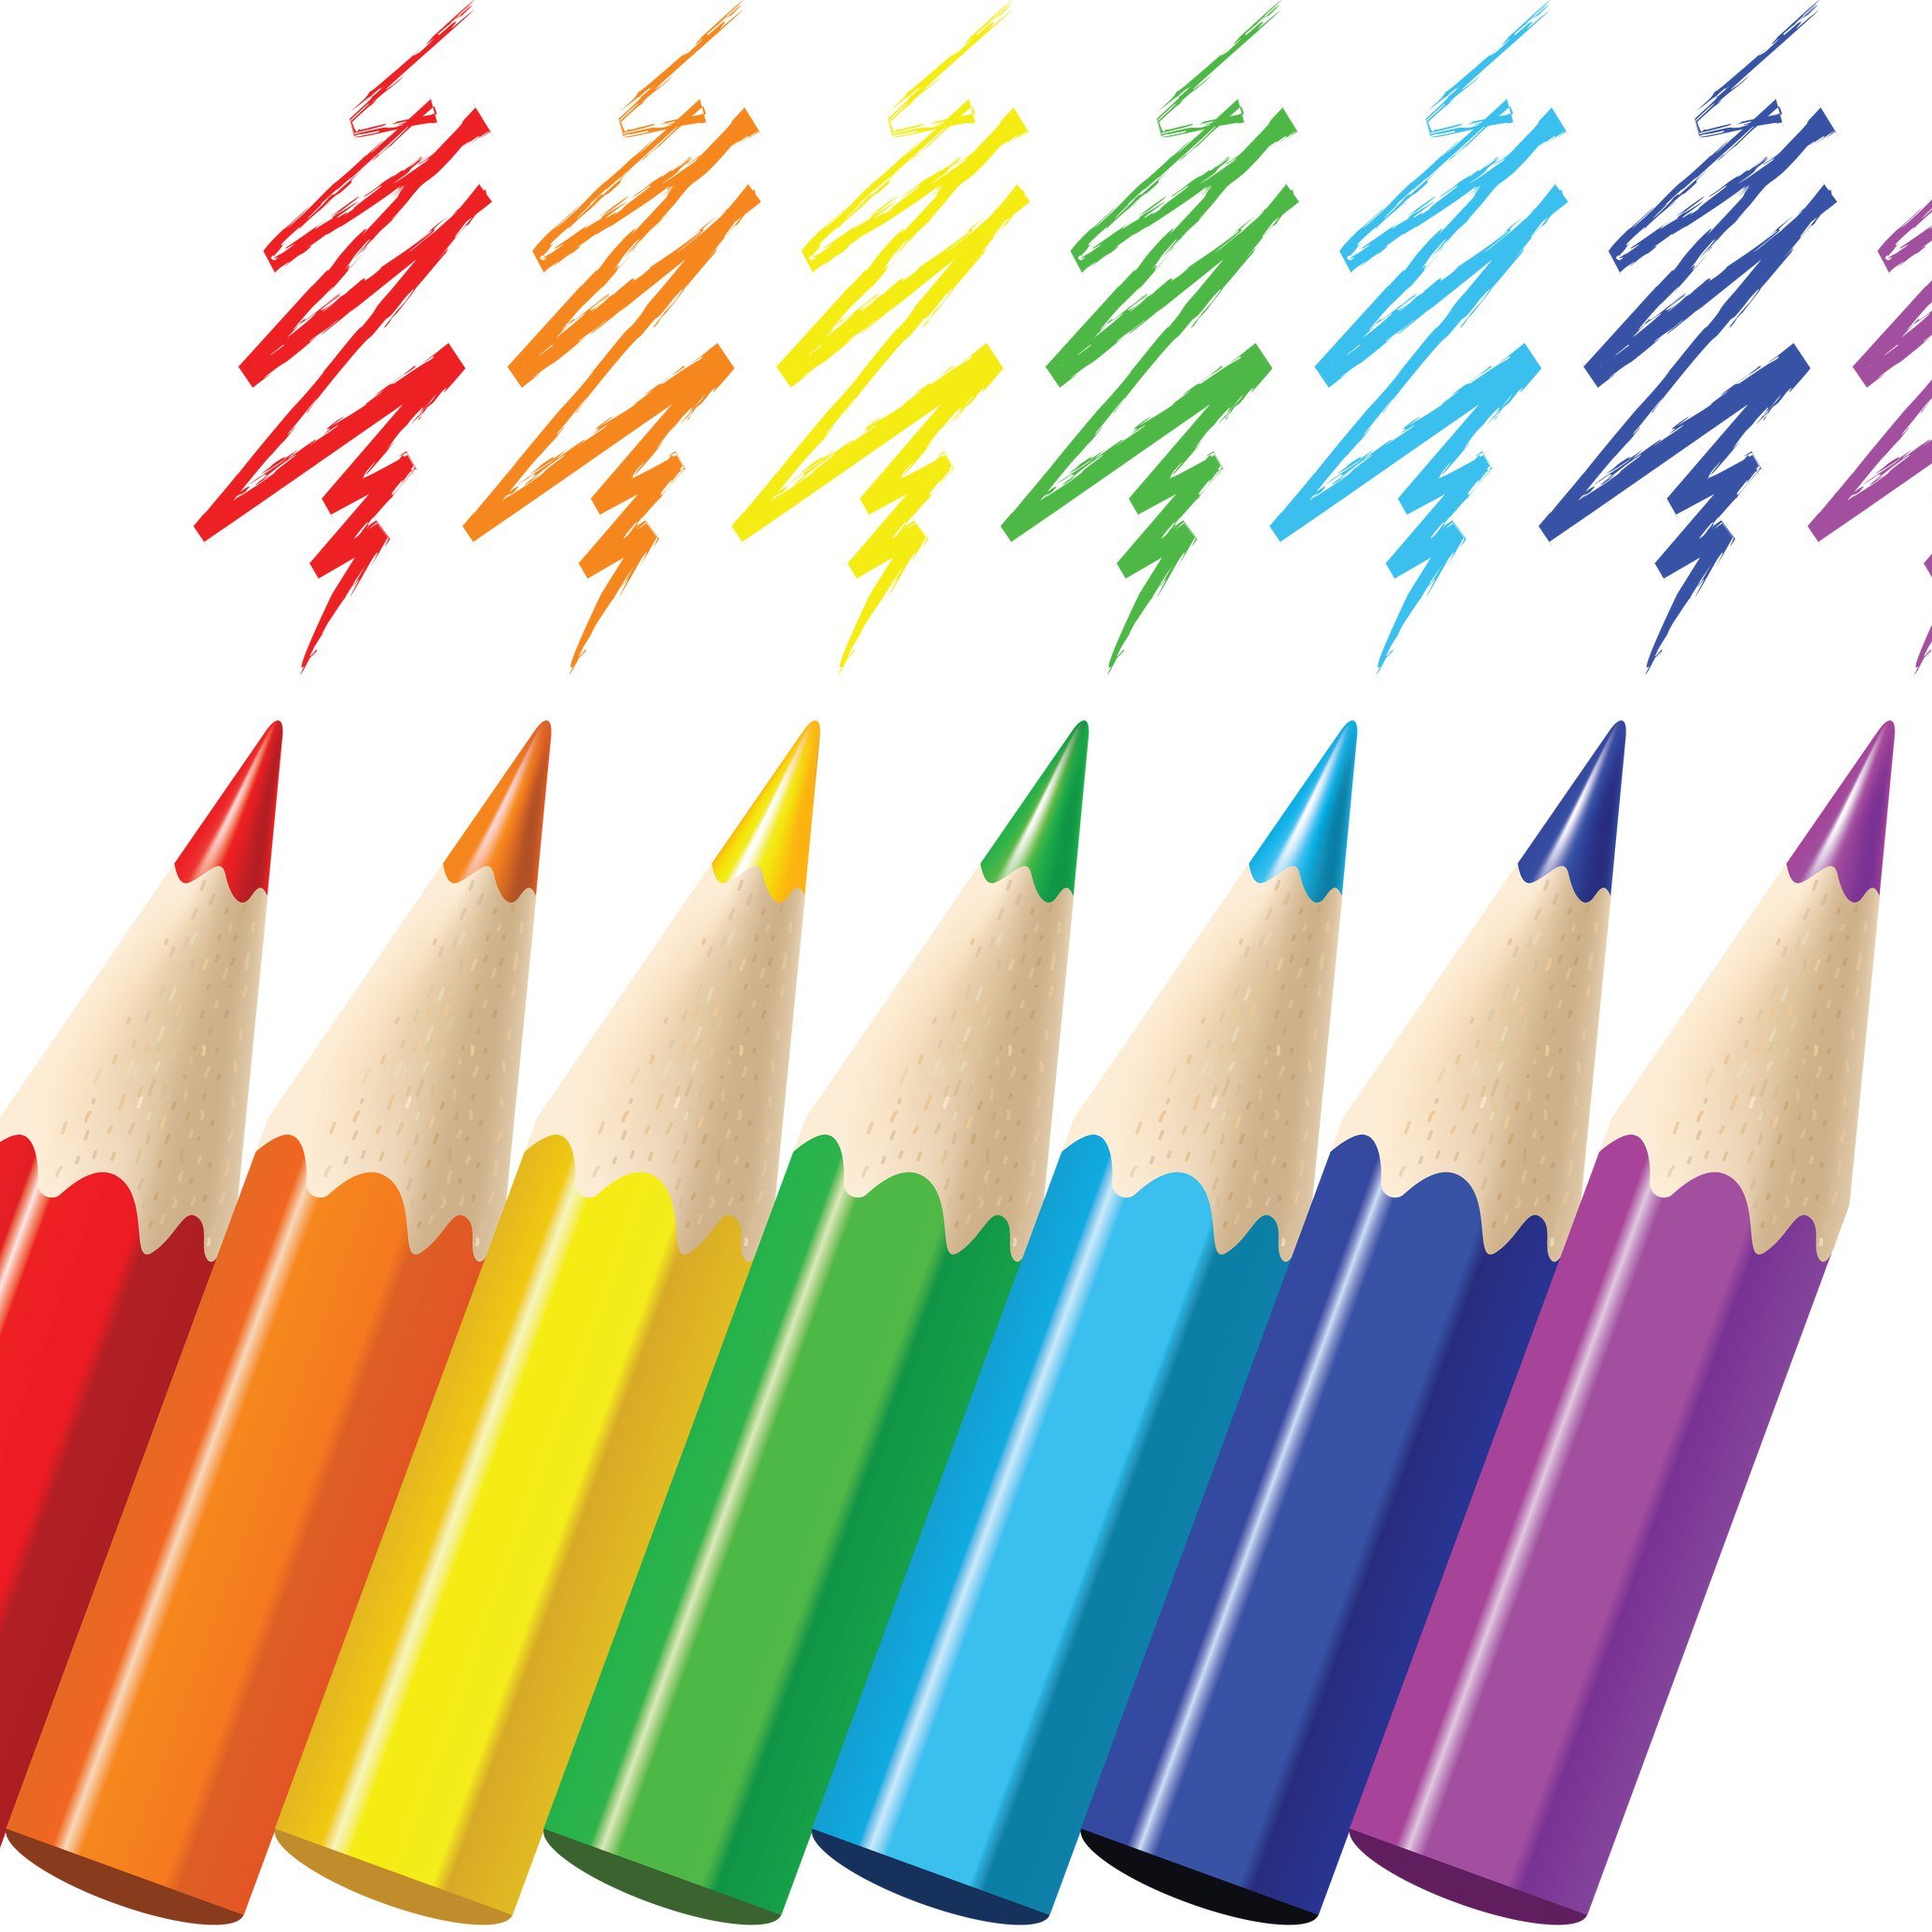 Изображения карандашей. Карандаши колор пенсил. Карандаши цветные. Карандаш клипарт. Рисование карандашом.